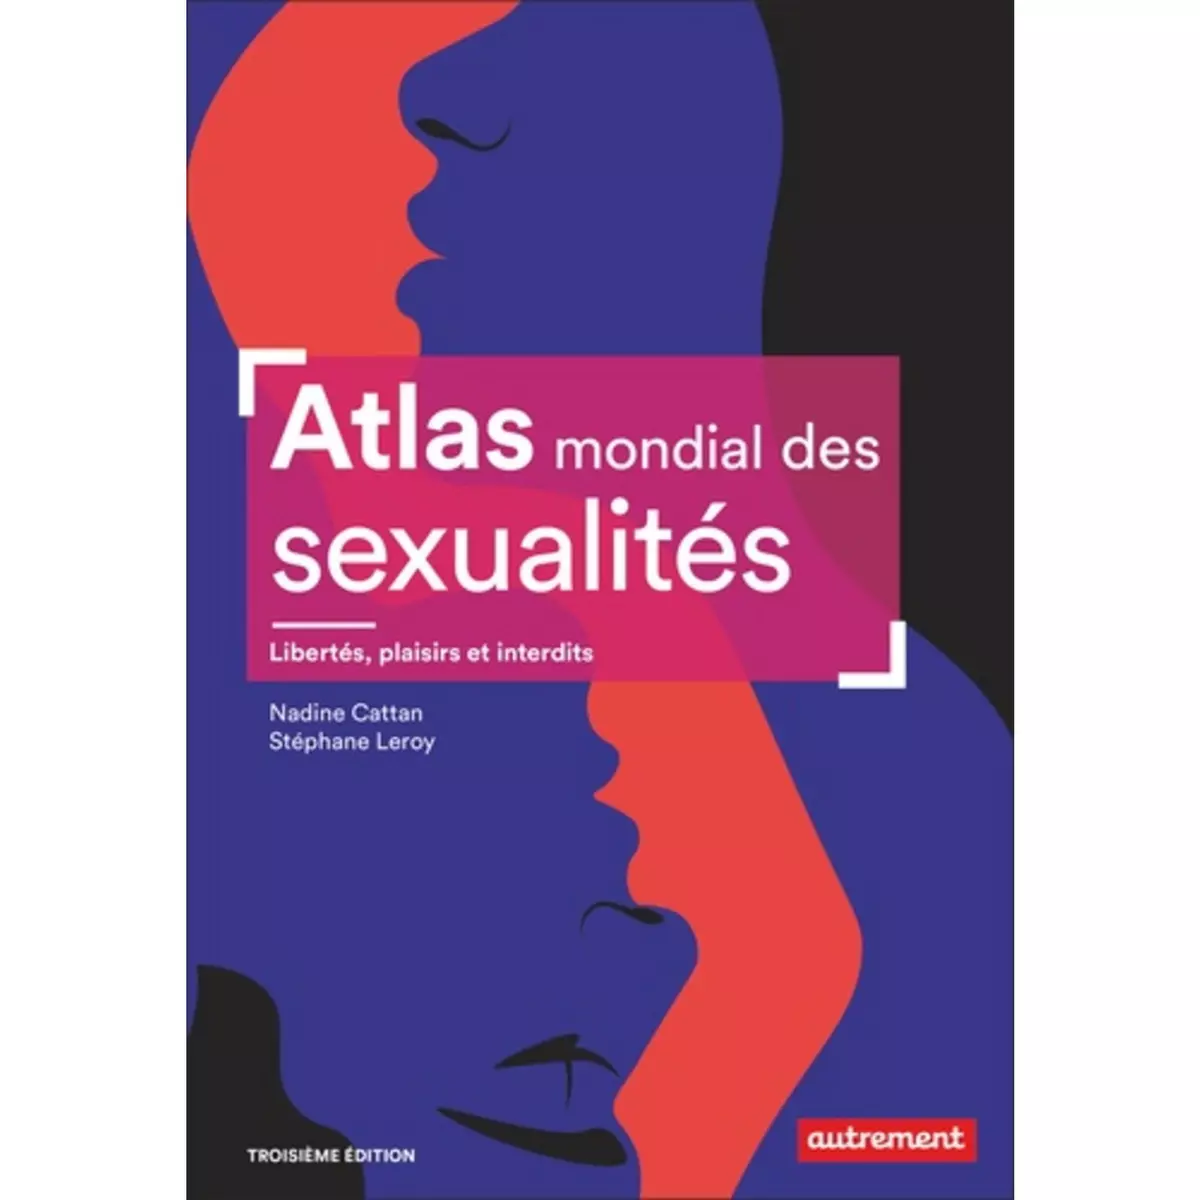  ATLAS MONDIAL DES SEXUALITES. LIBERTES, PLAISIRS ET INTERDITS, 3E EDITION, Cattan Nadine